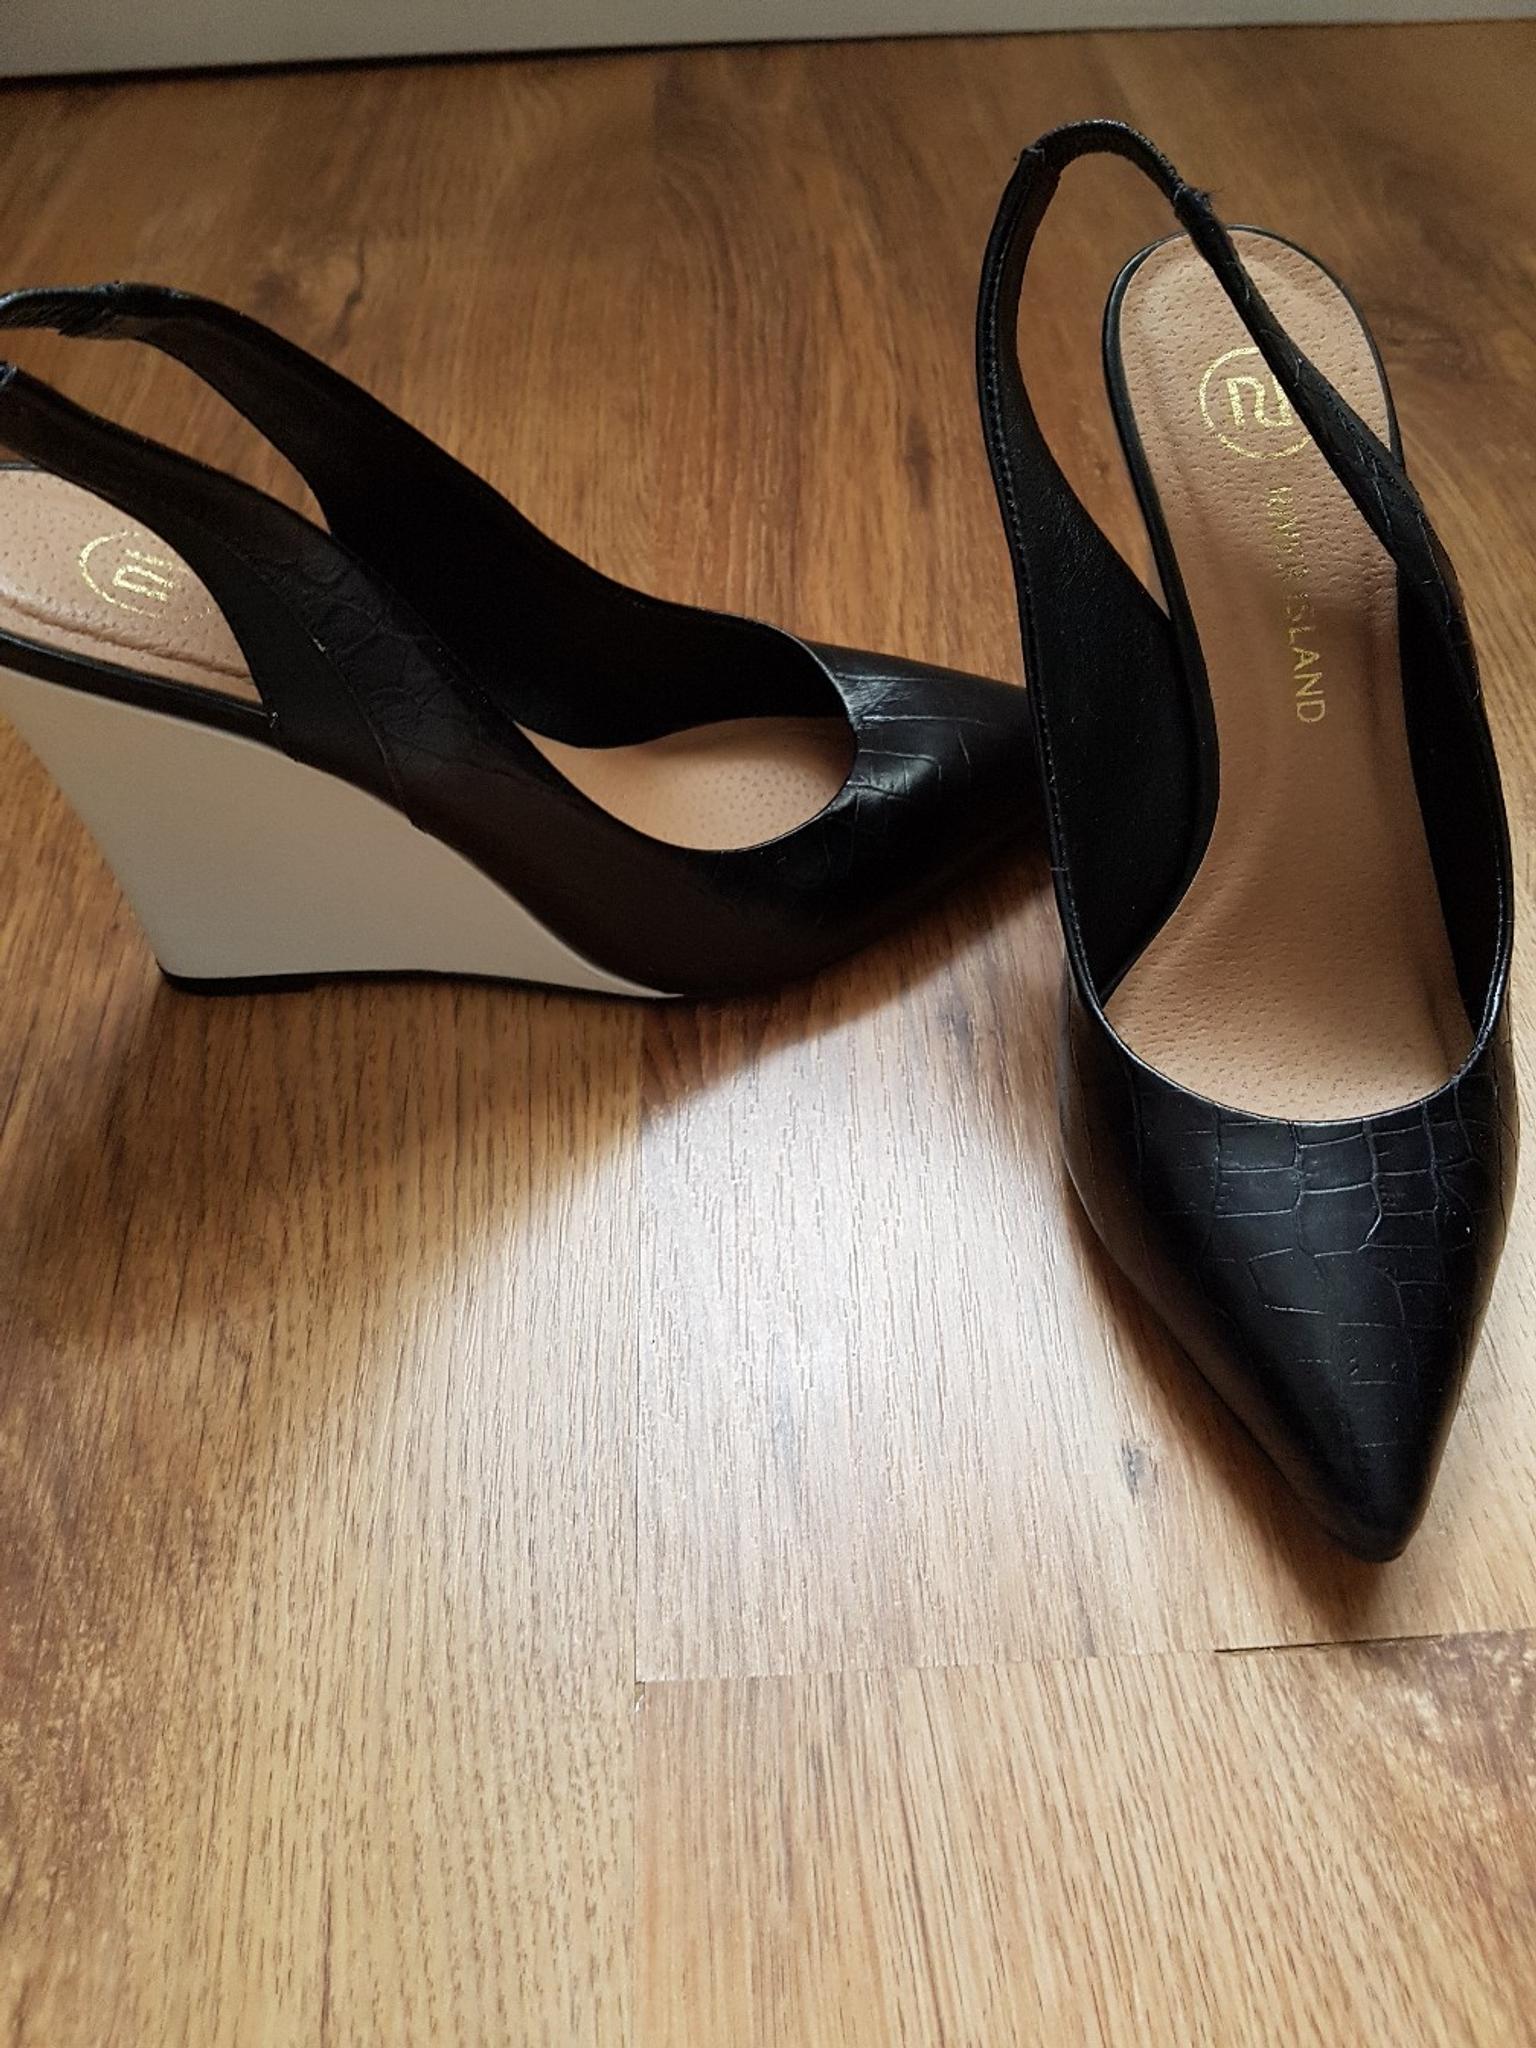 3 and half inch heels